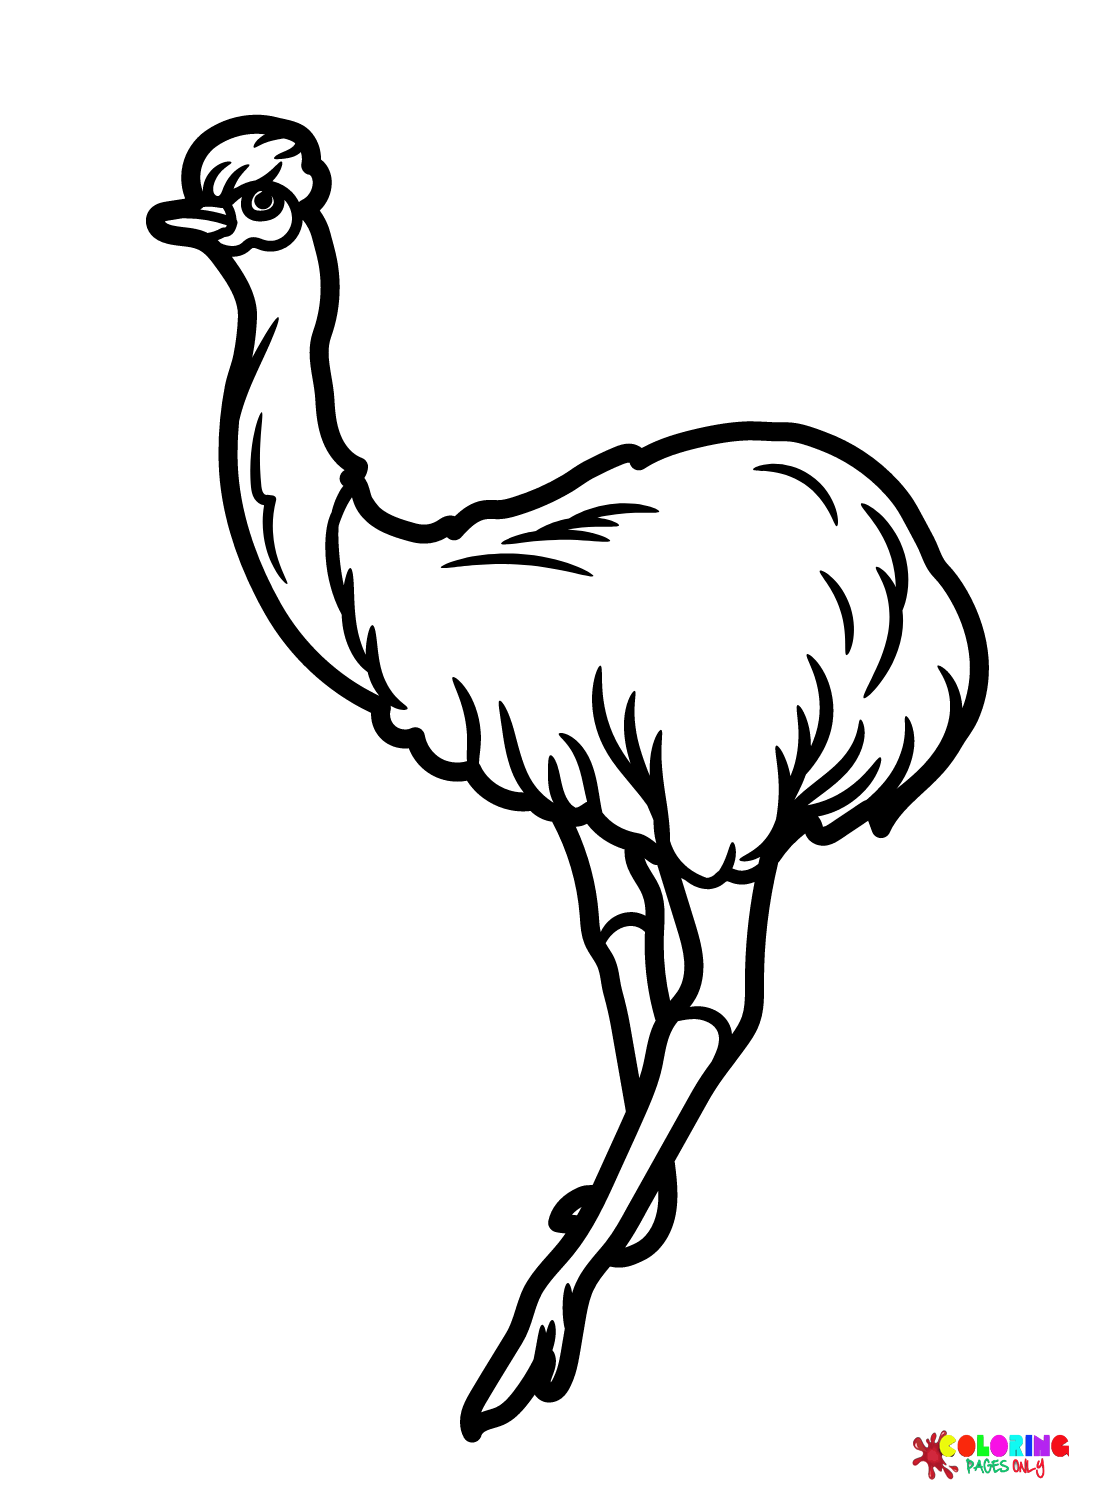 Printable Emu Bird from Emu